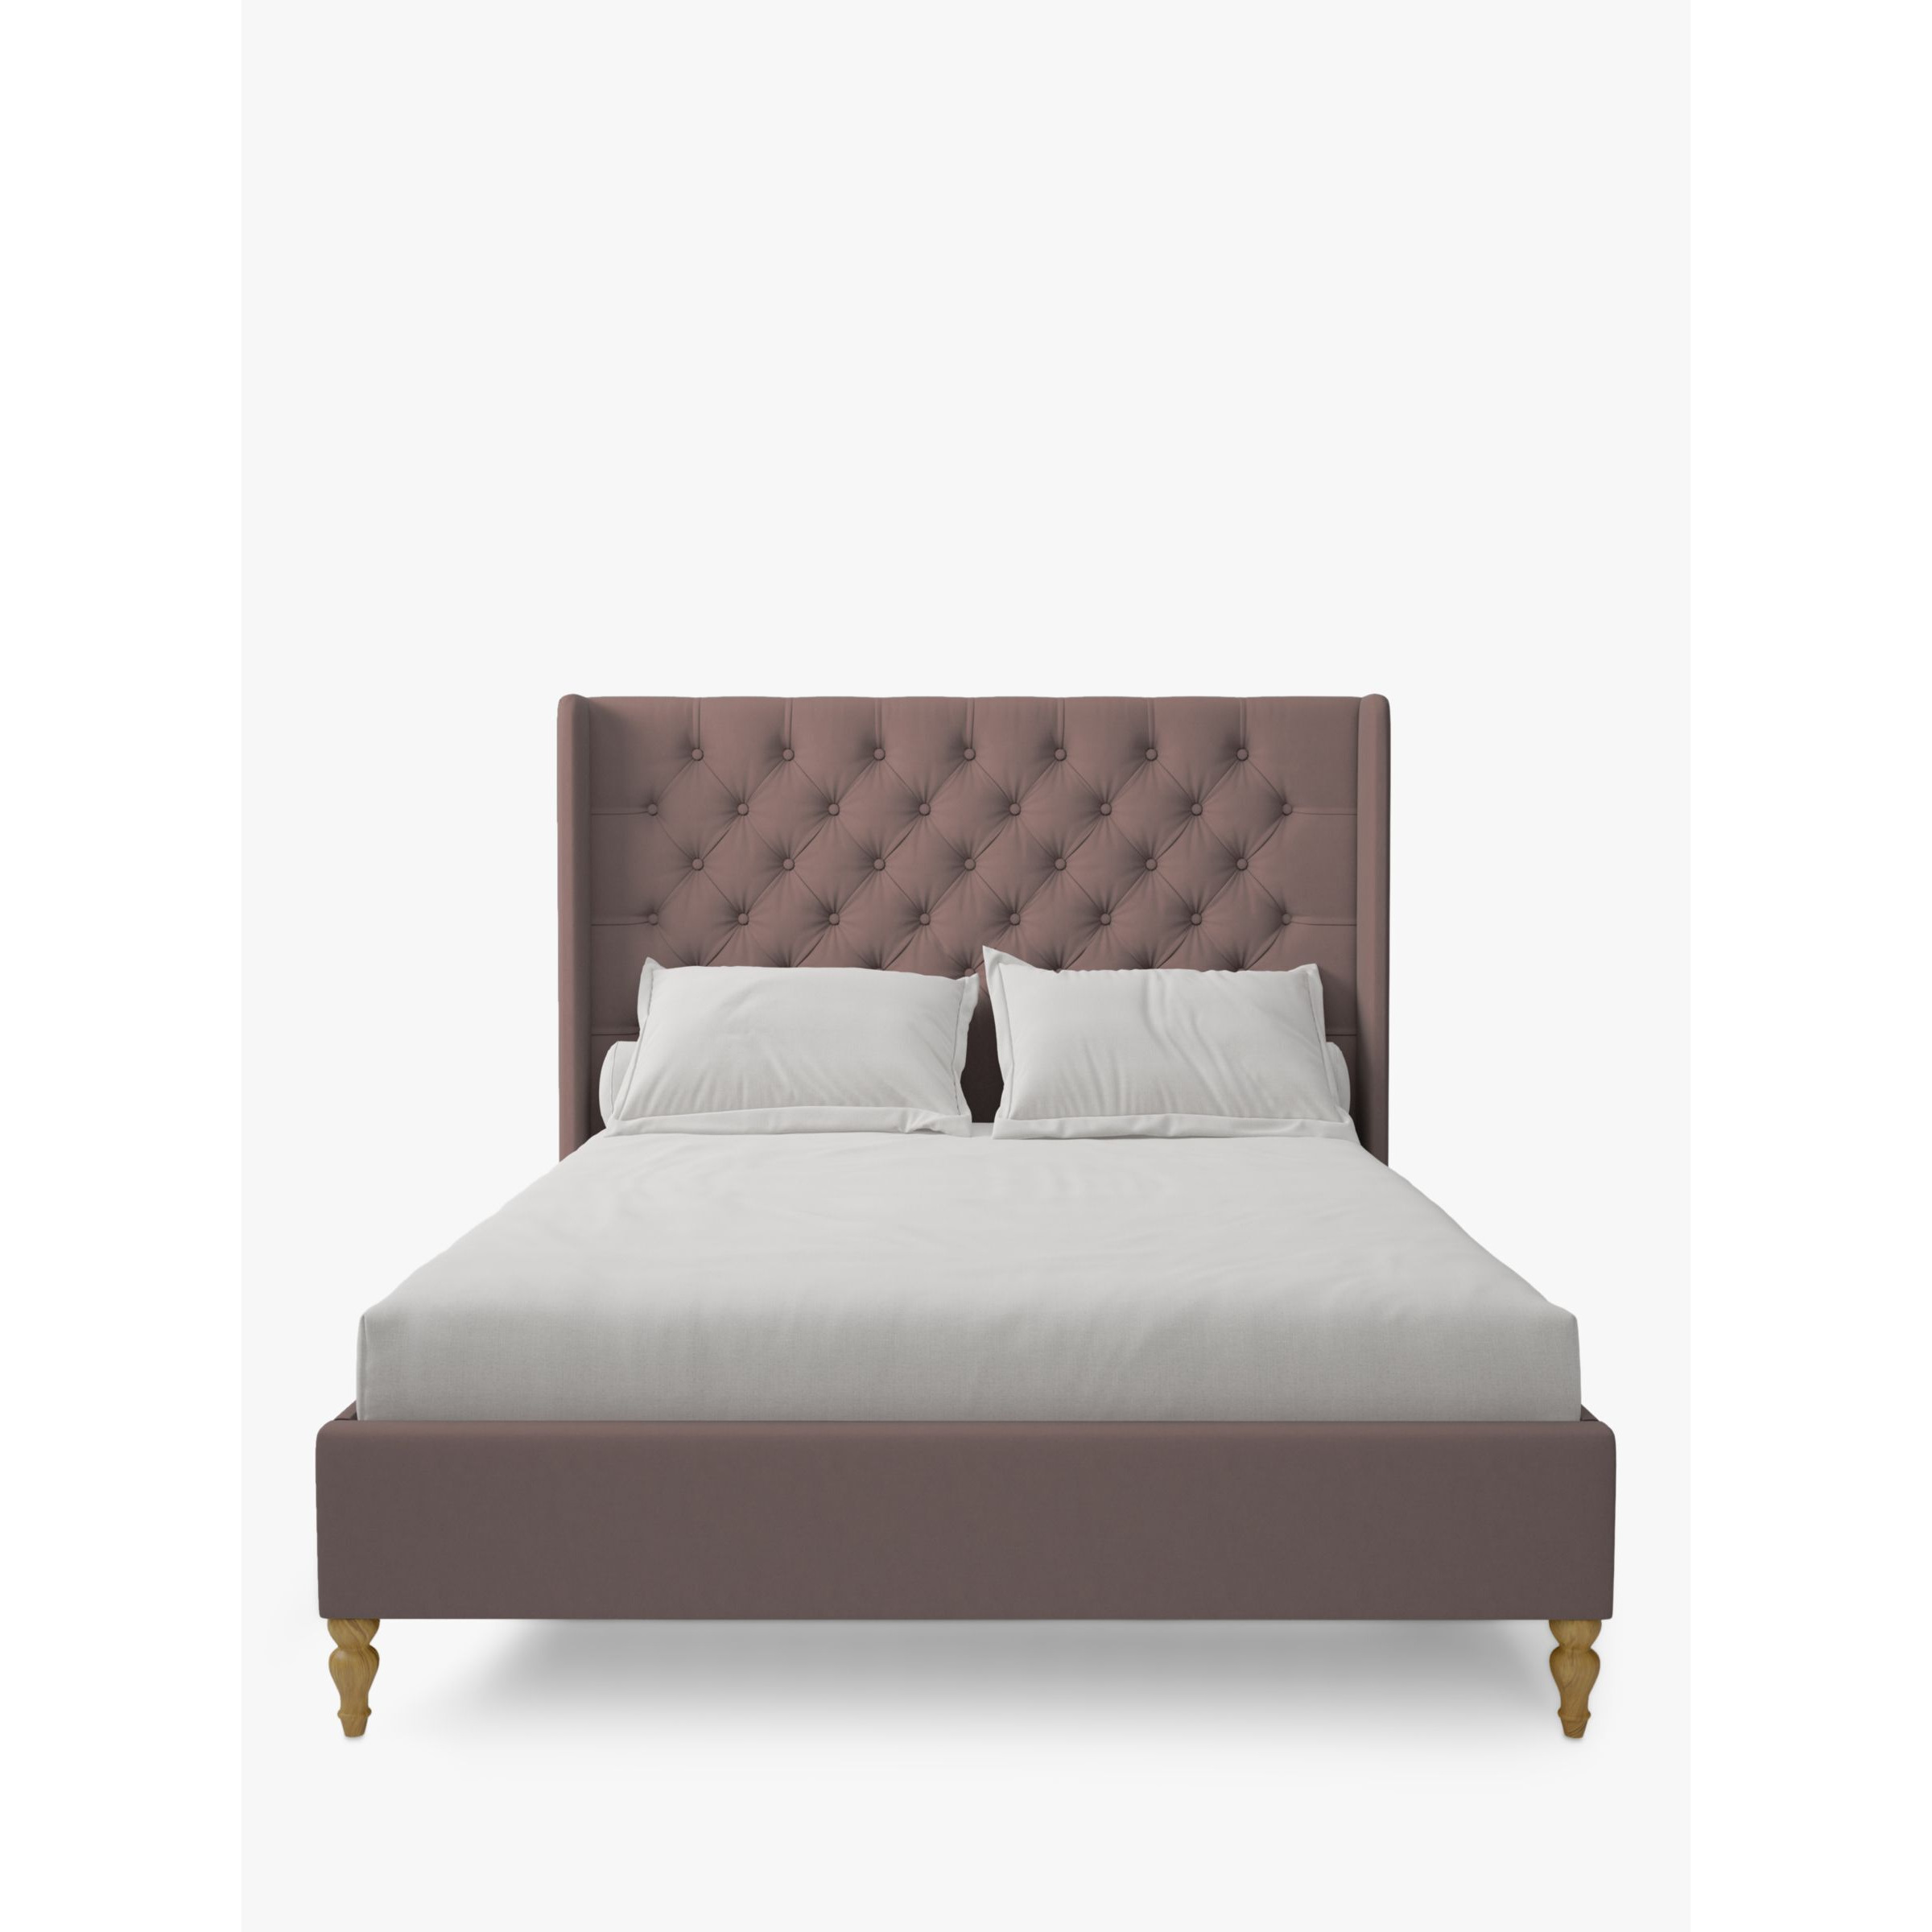 Koti Home Astley Upholstered Bed Frame, Double - image 1